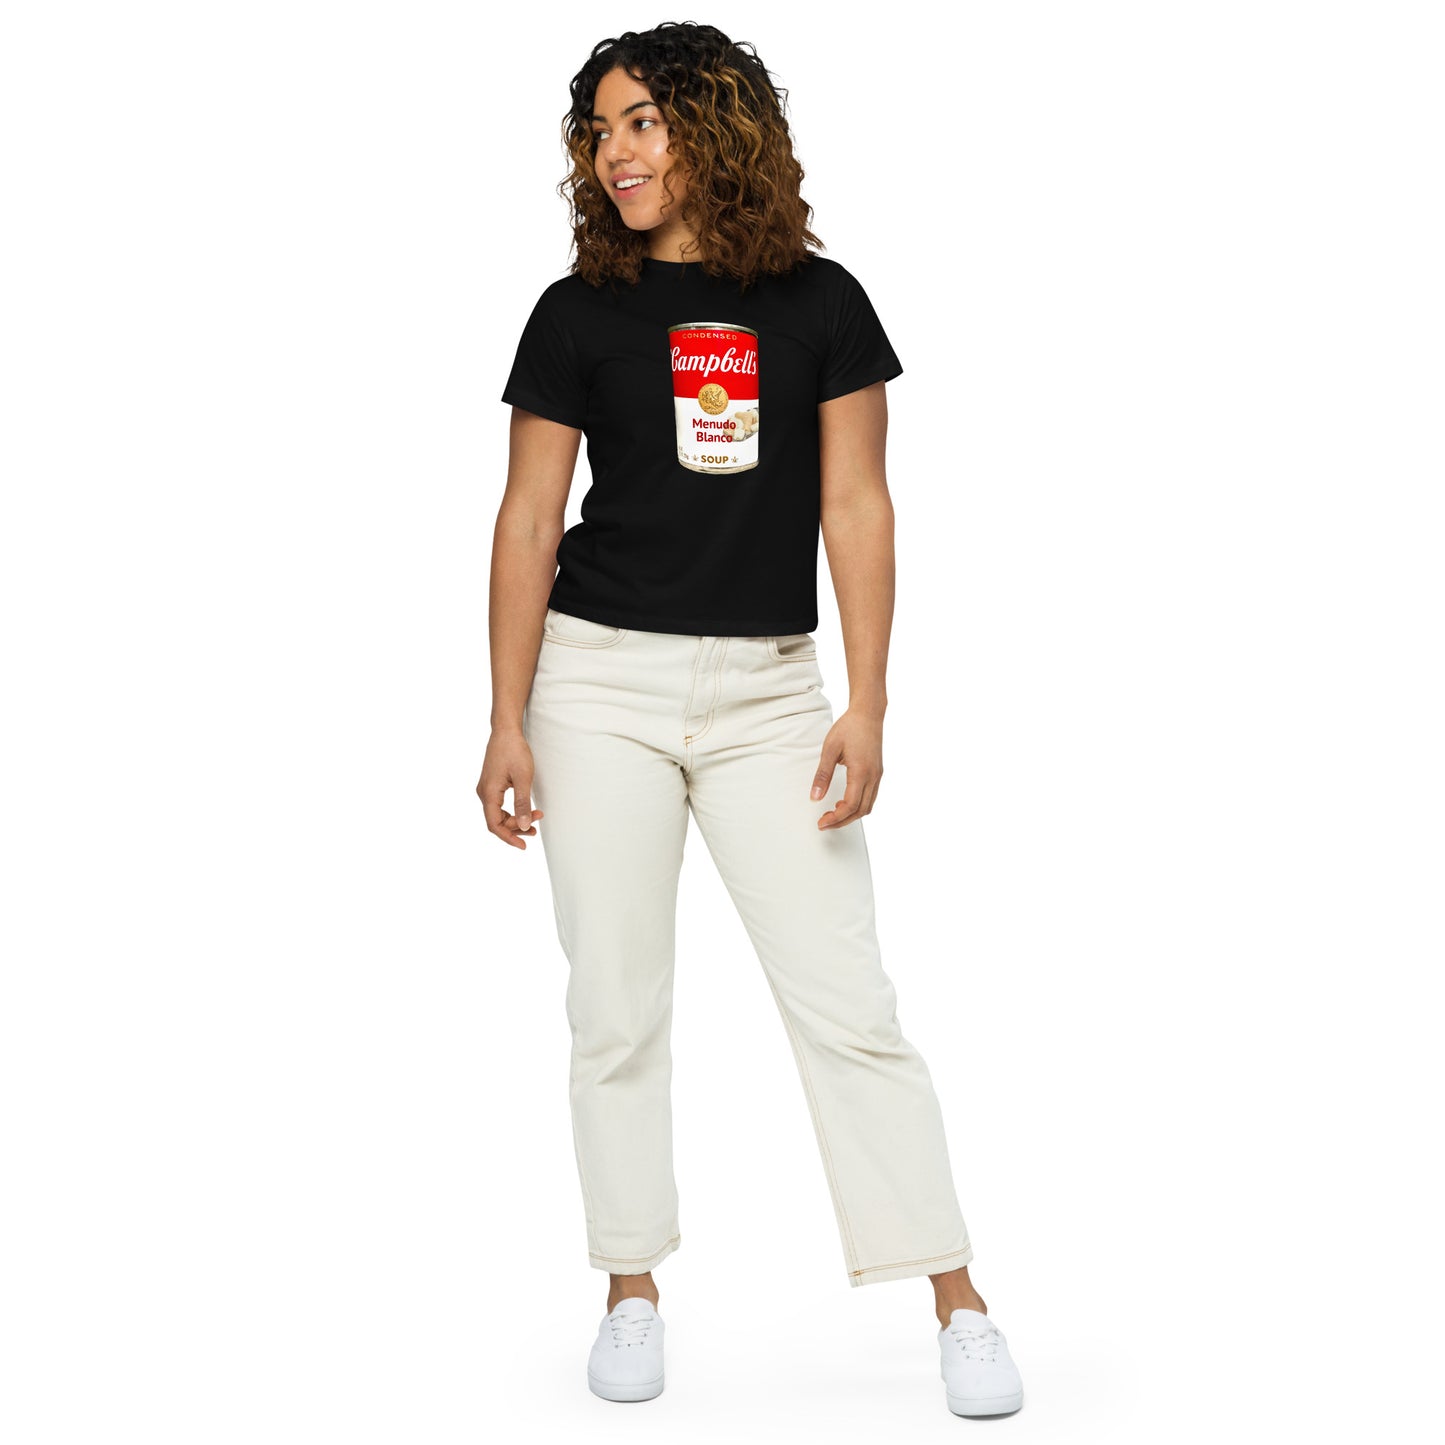 Snooty Fox Art Women’s High-Waisted T-shirt - Campbell's Soup Menudo Blanco